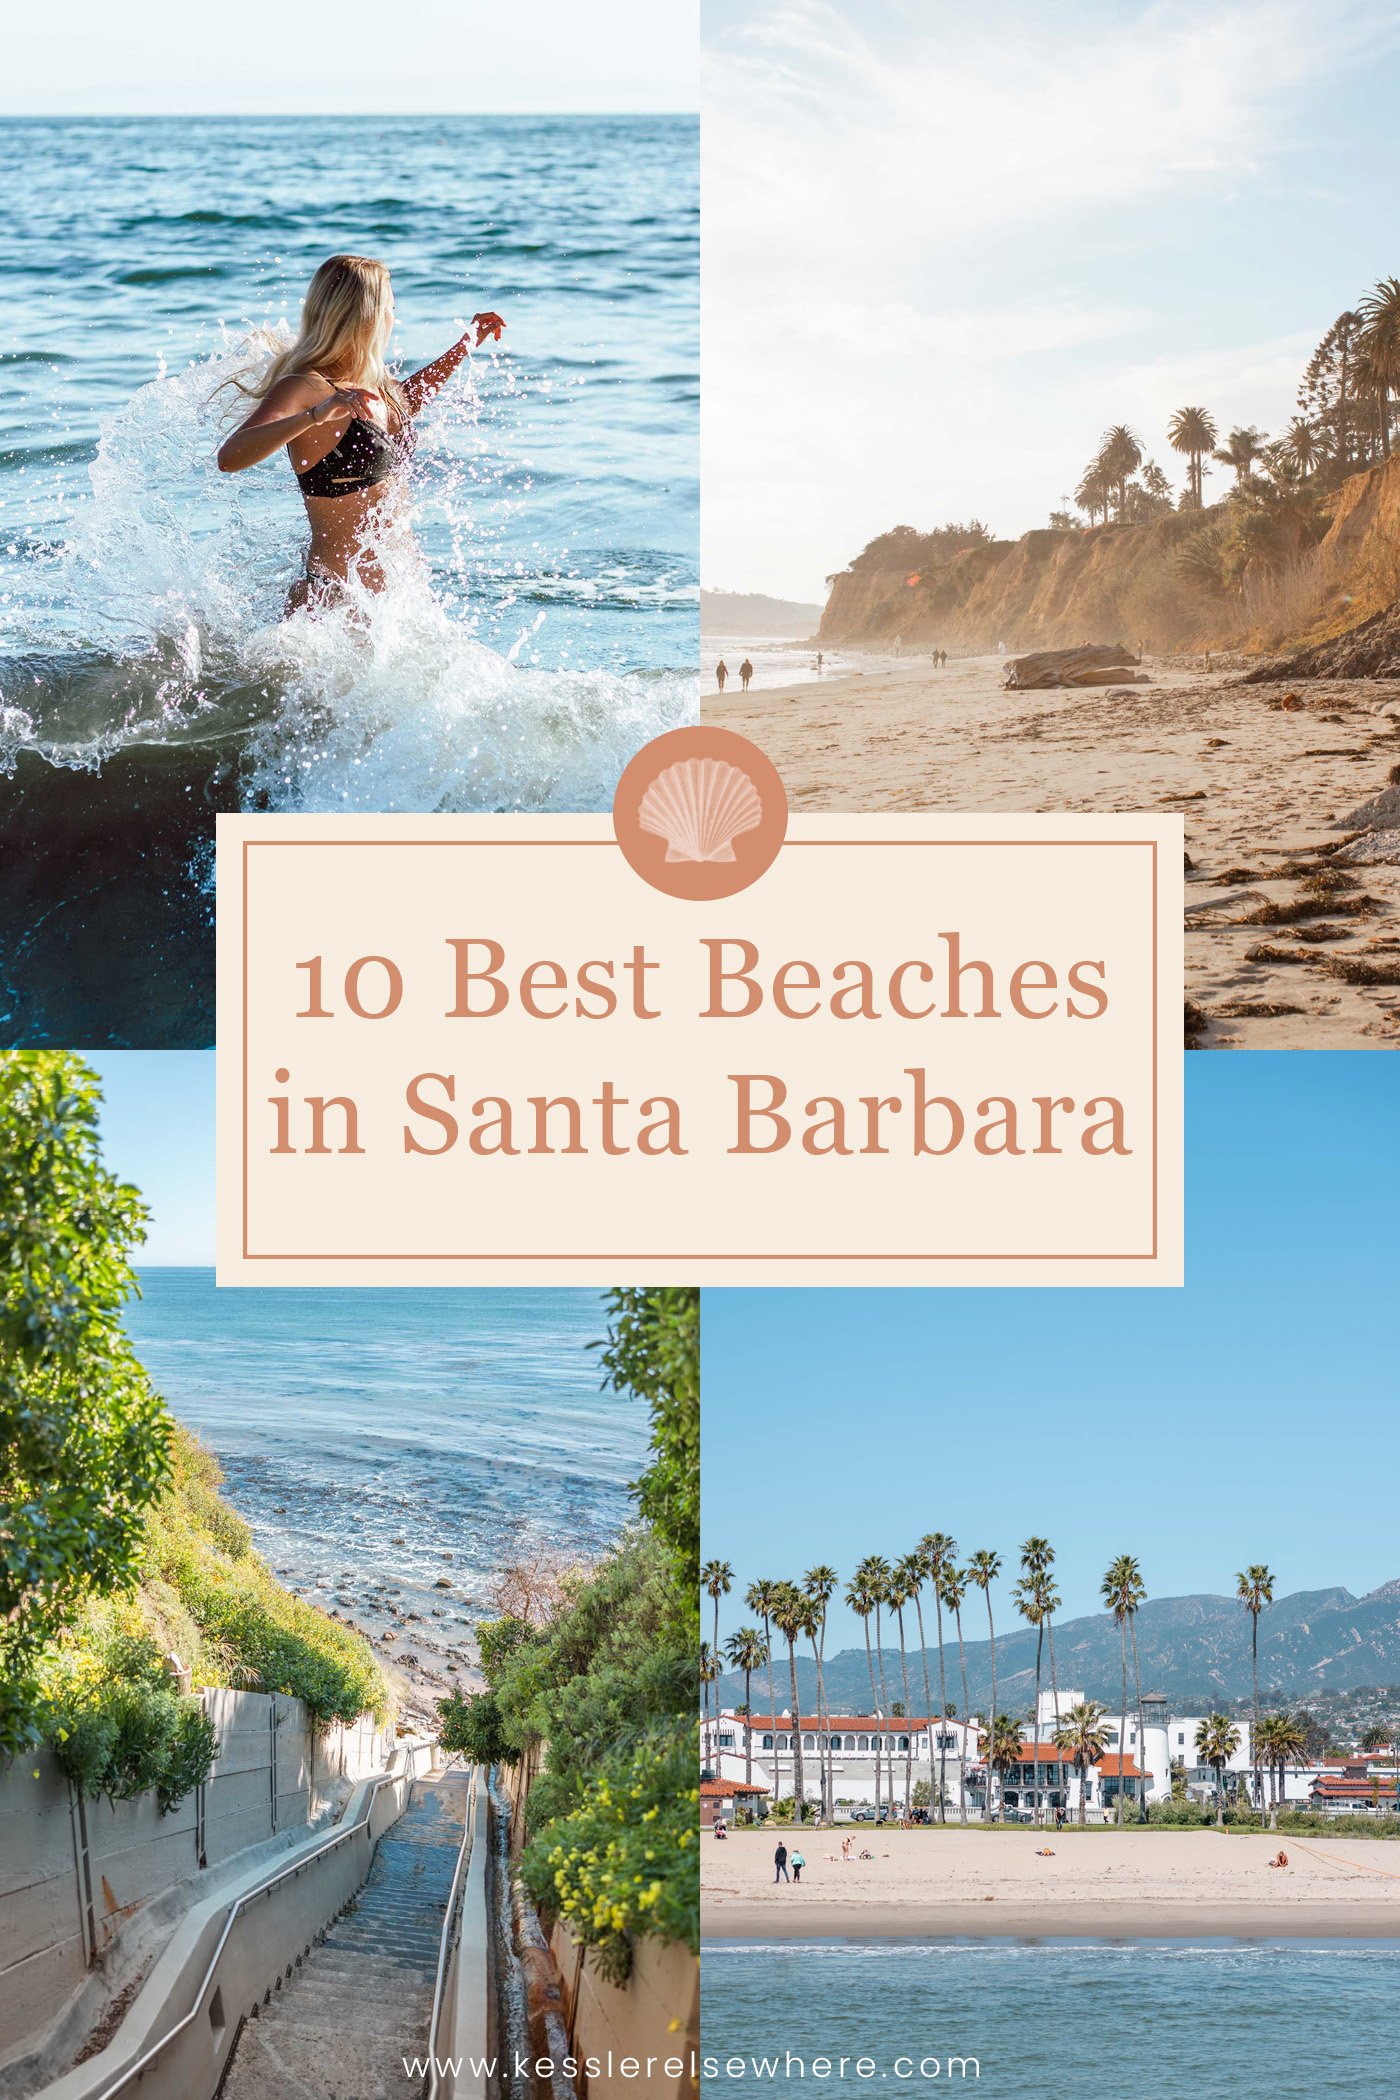 10 Best Beaches in Santa Barbara